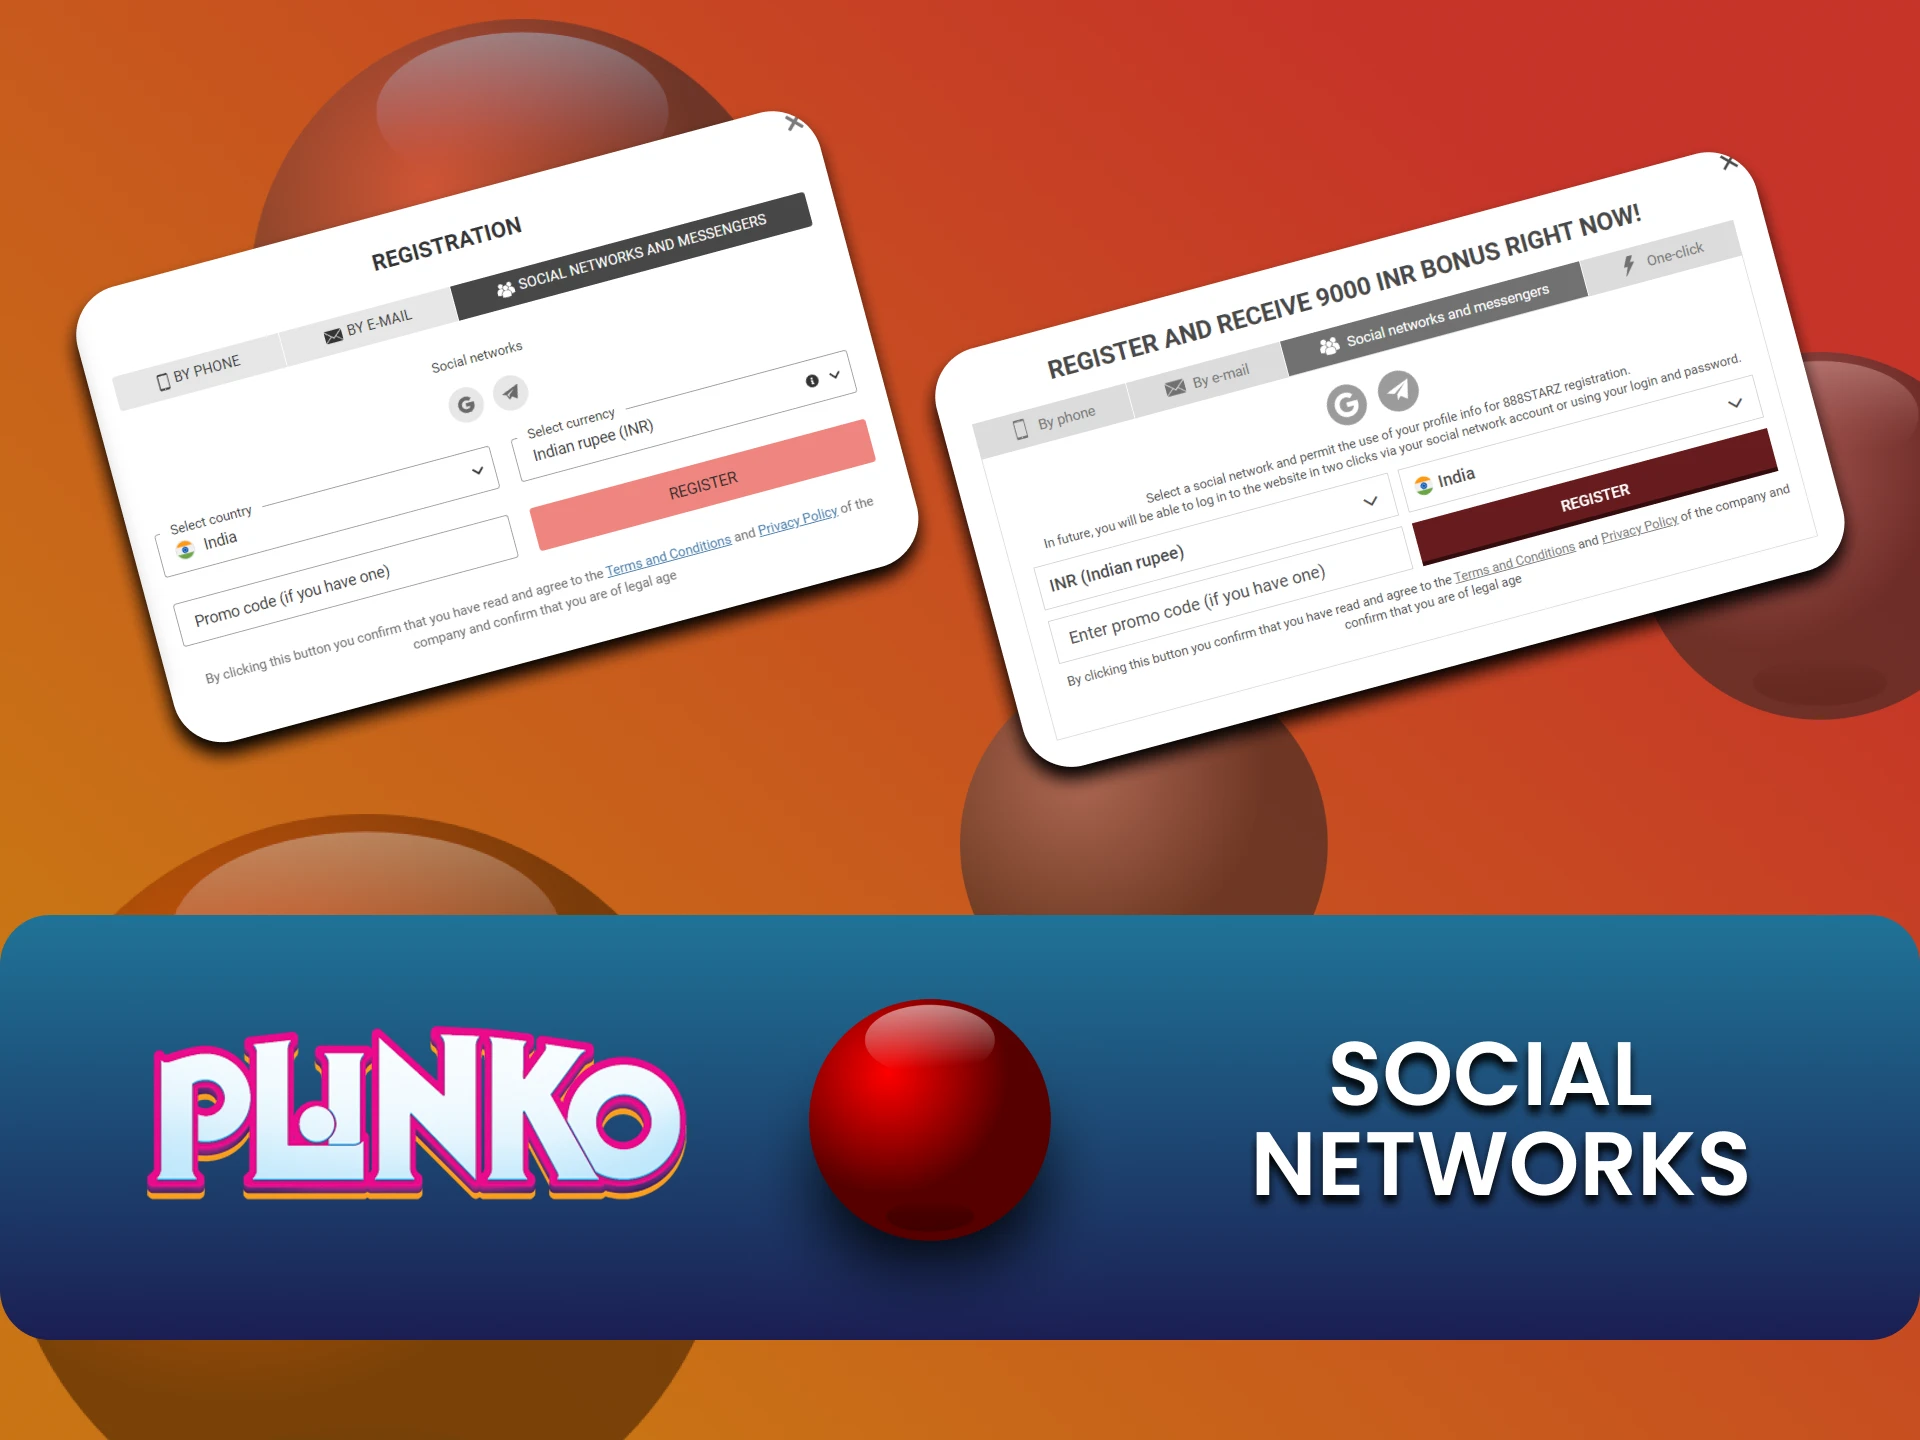 To play Plinko, select the registration method via Social Networks.